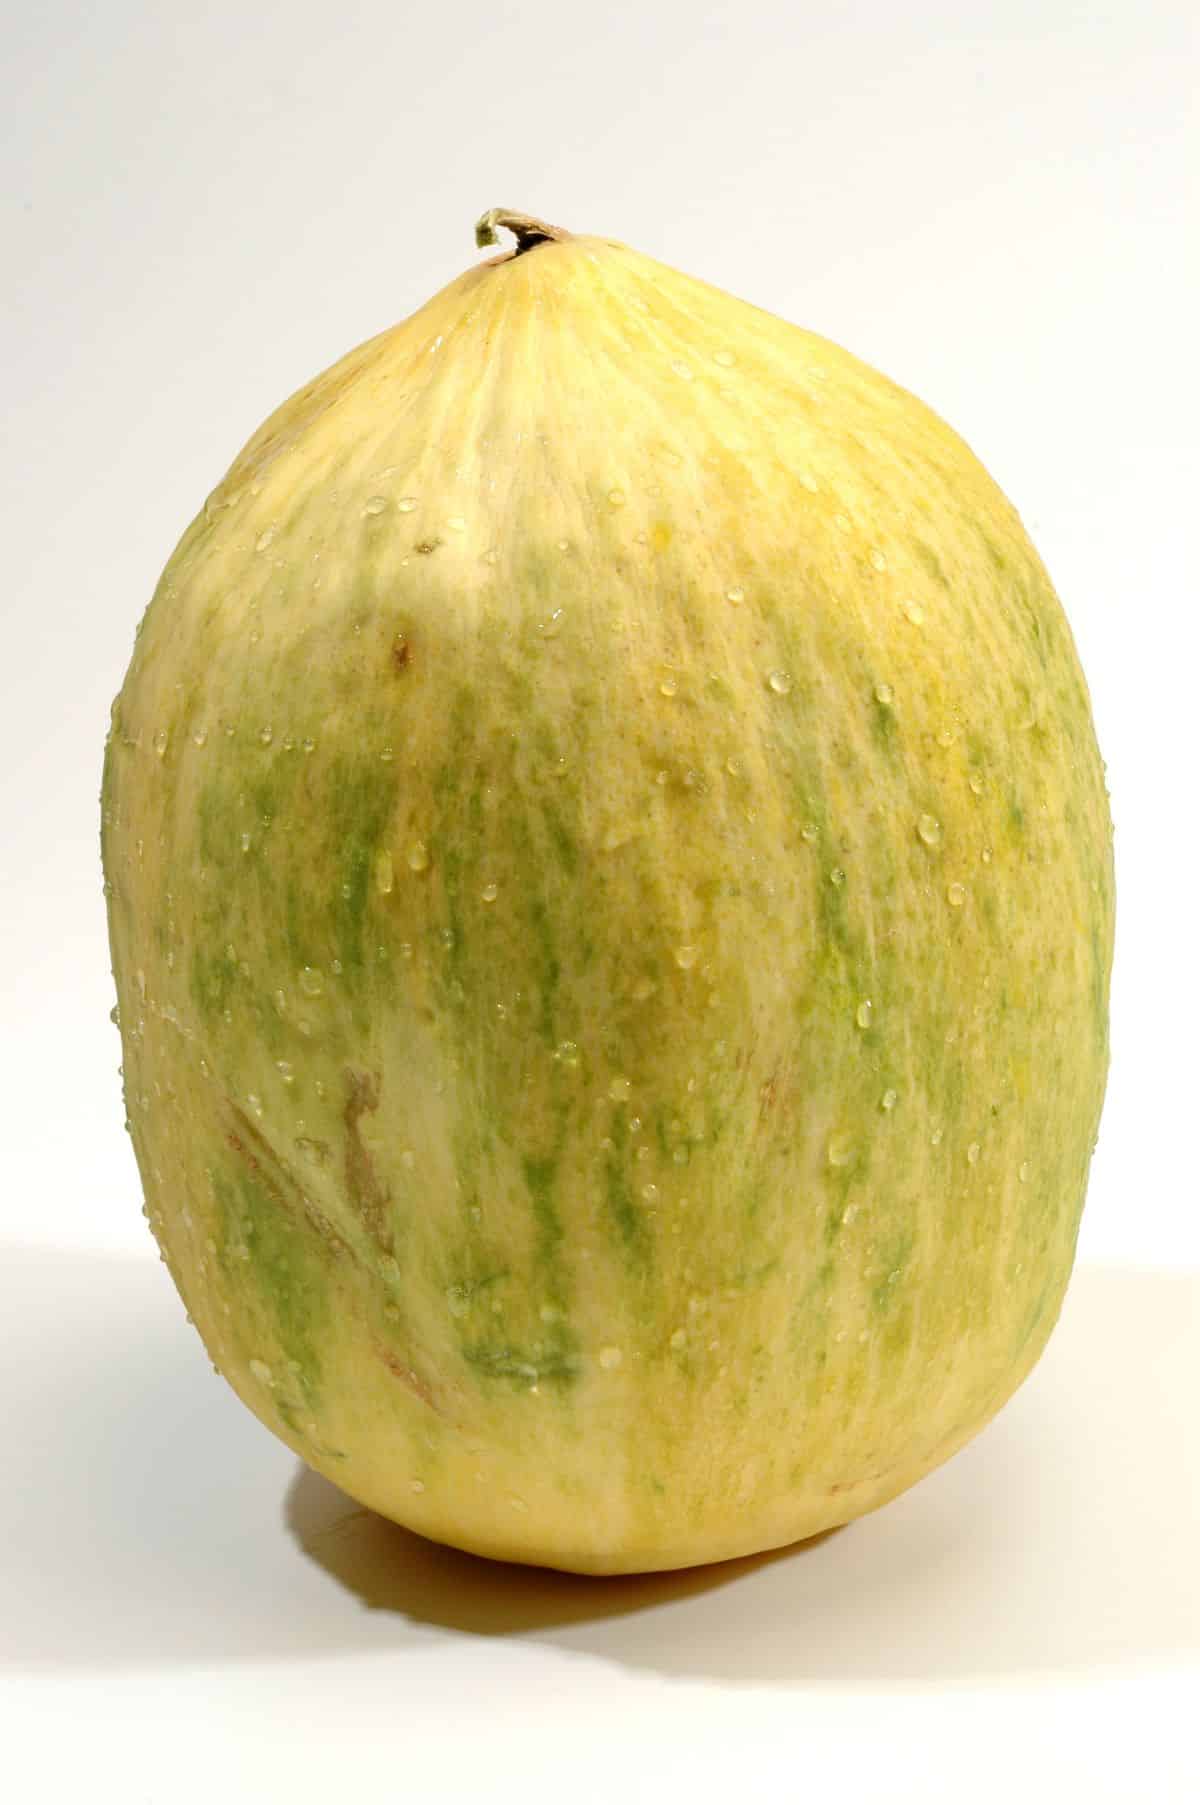 Large Crenshaw melon